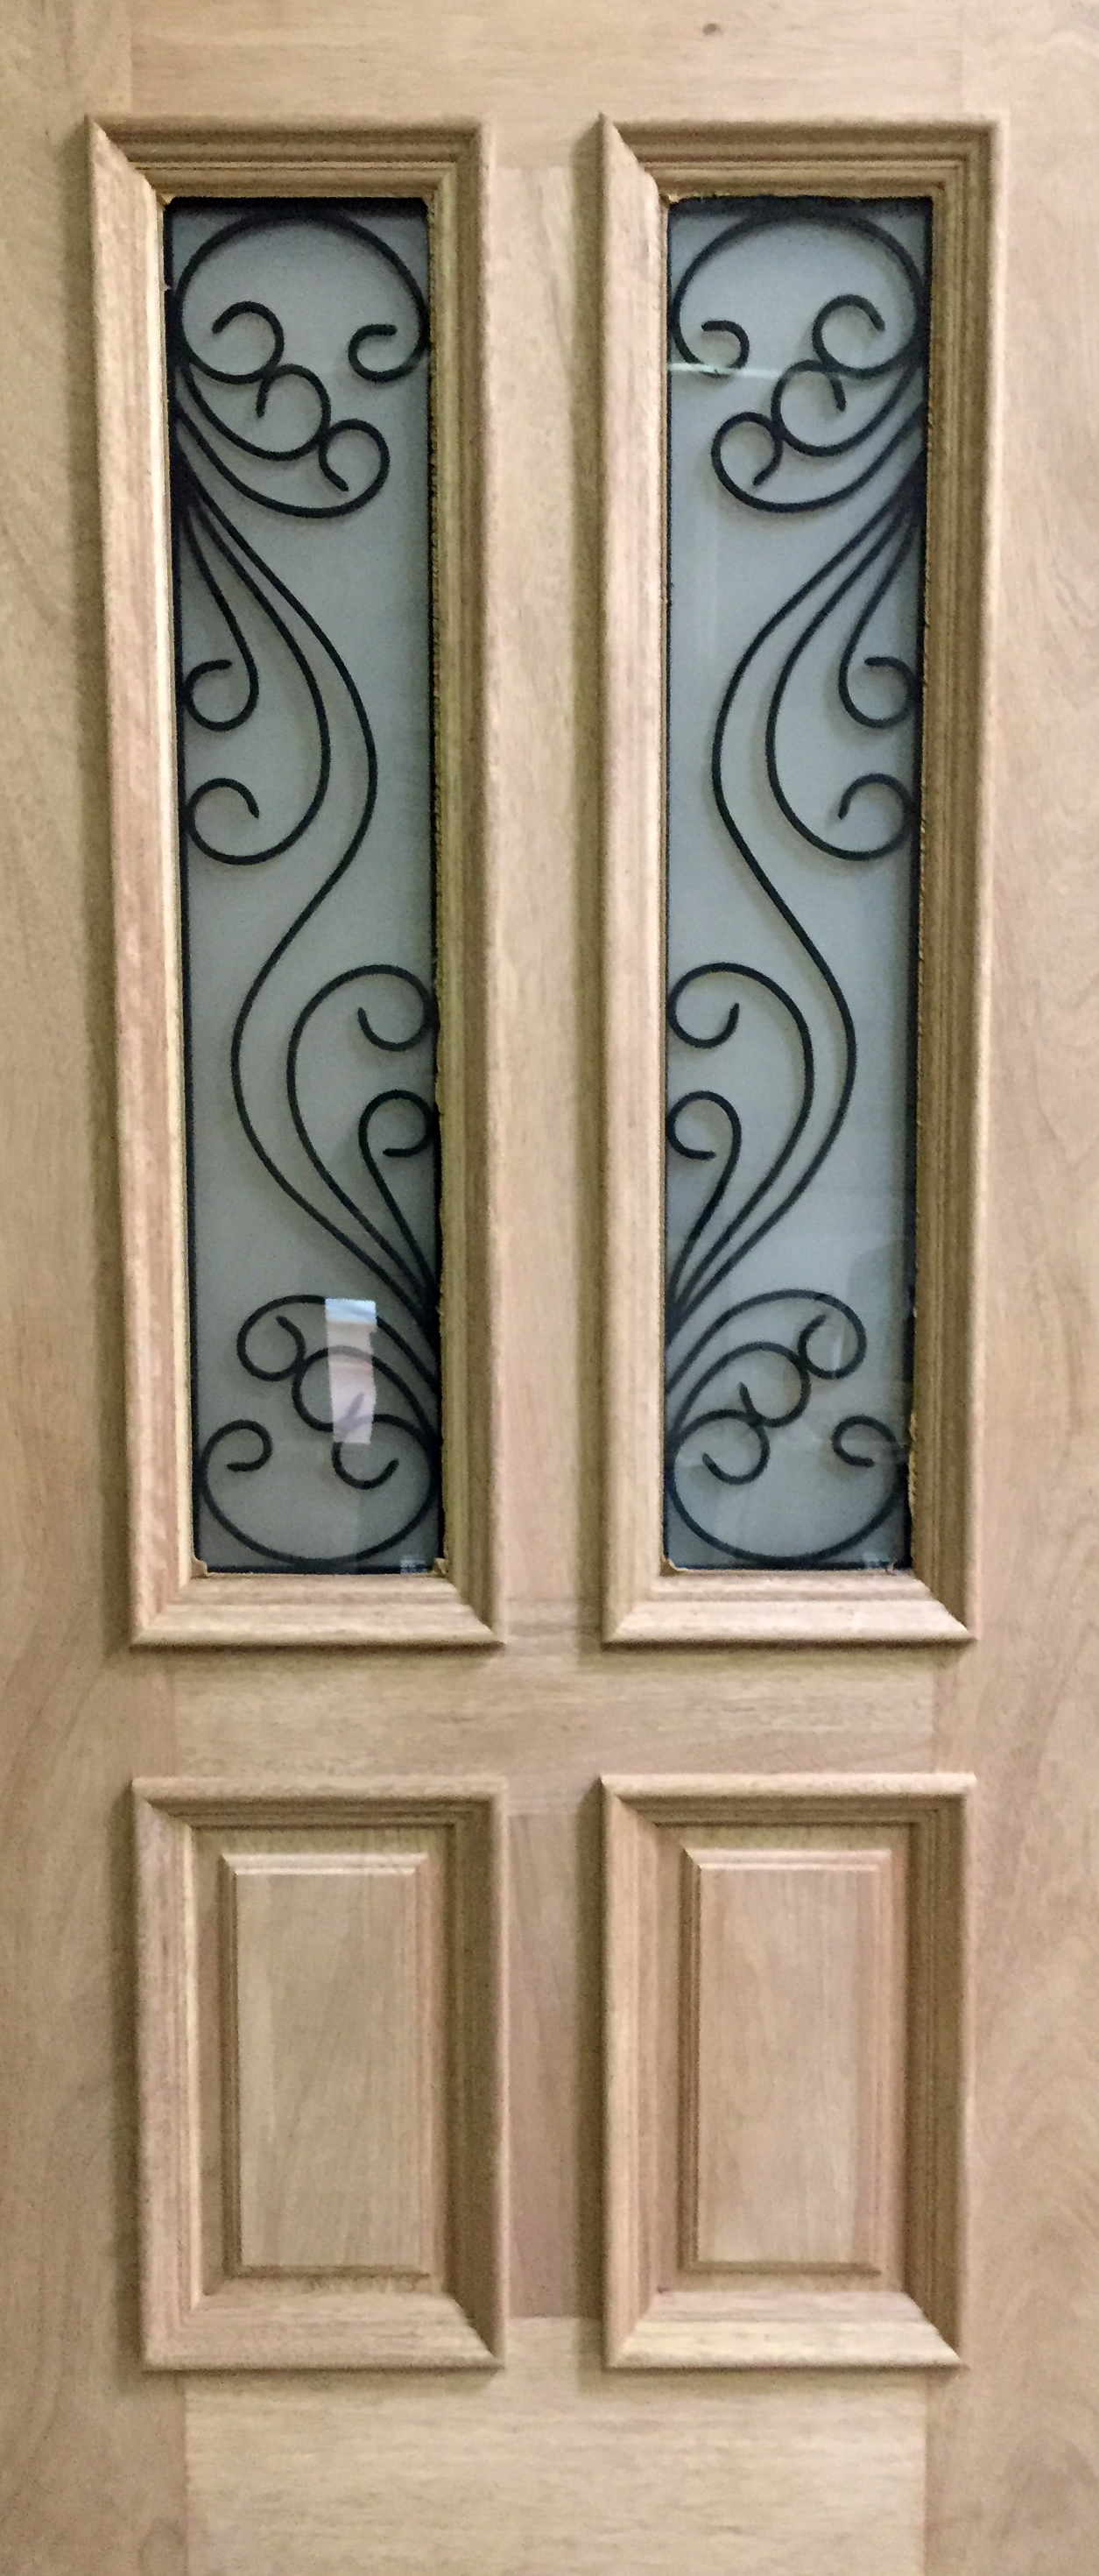 door with irononwindows.jpg